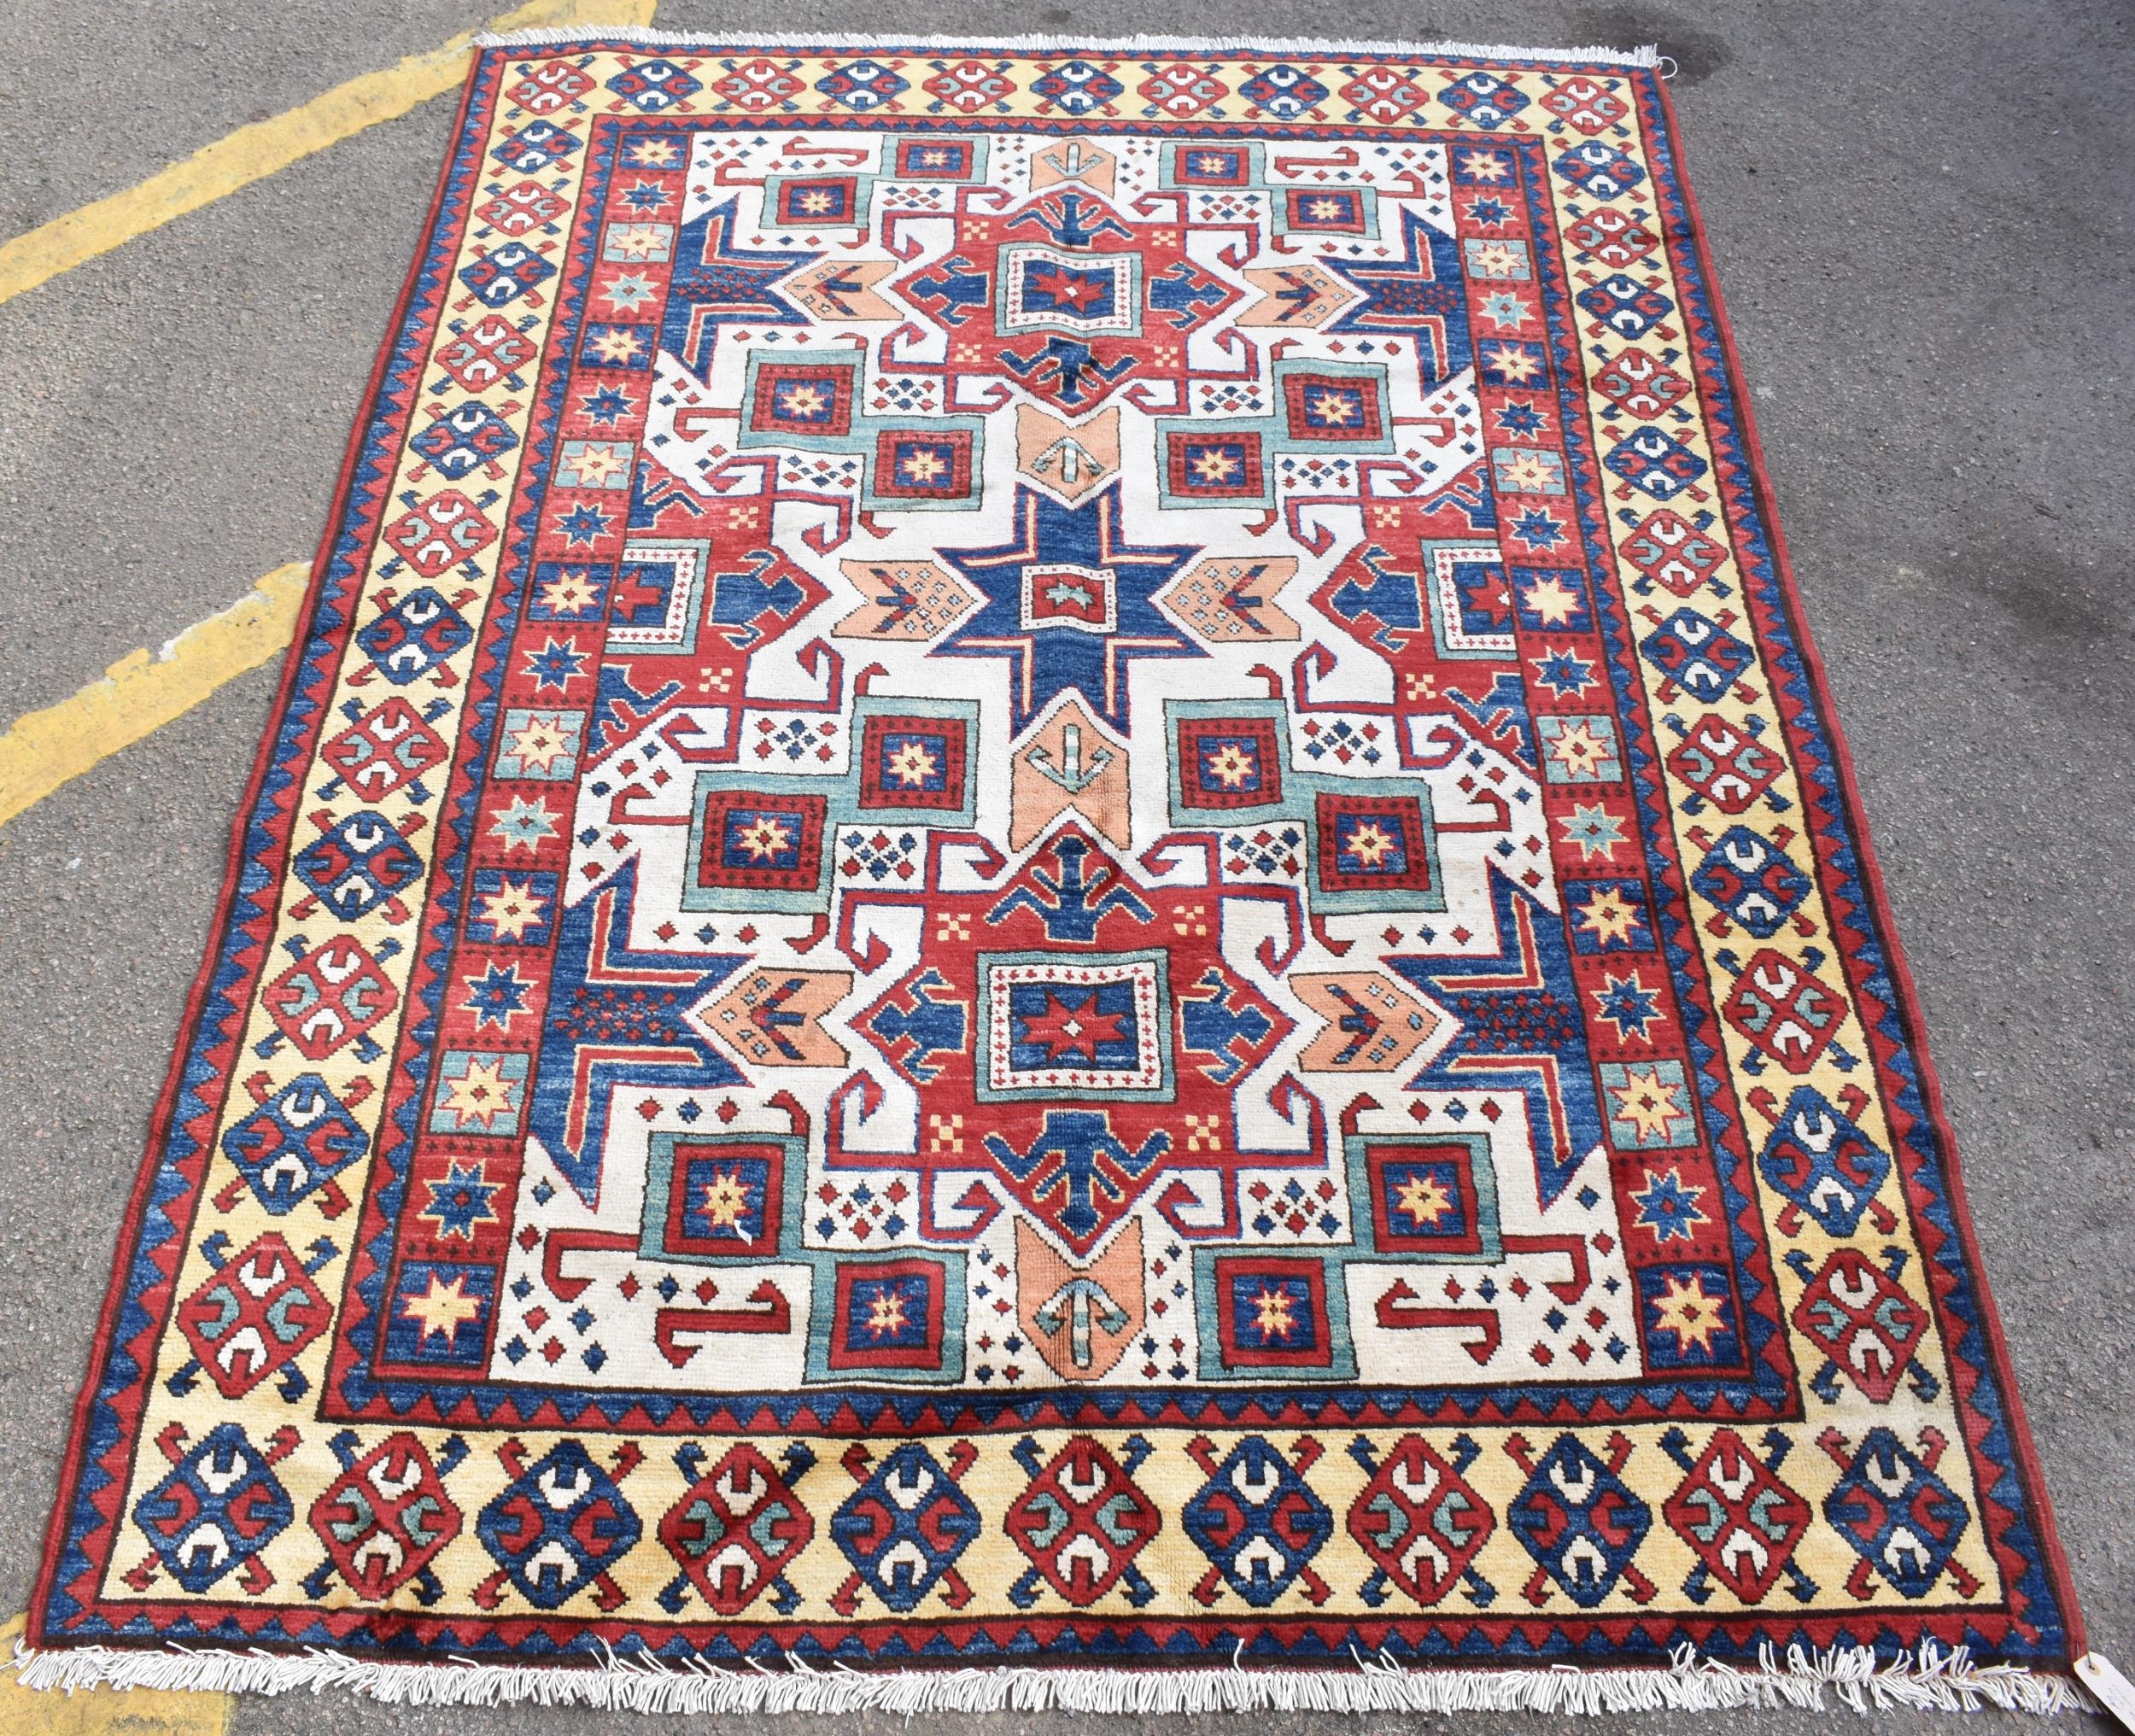 A handwoven Caucasian star kazak rug, having a geometric designs with repeating motifs, multiguard